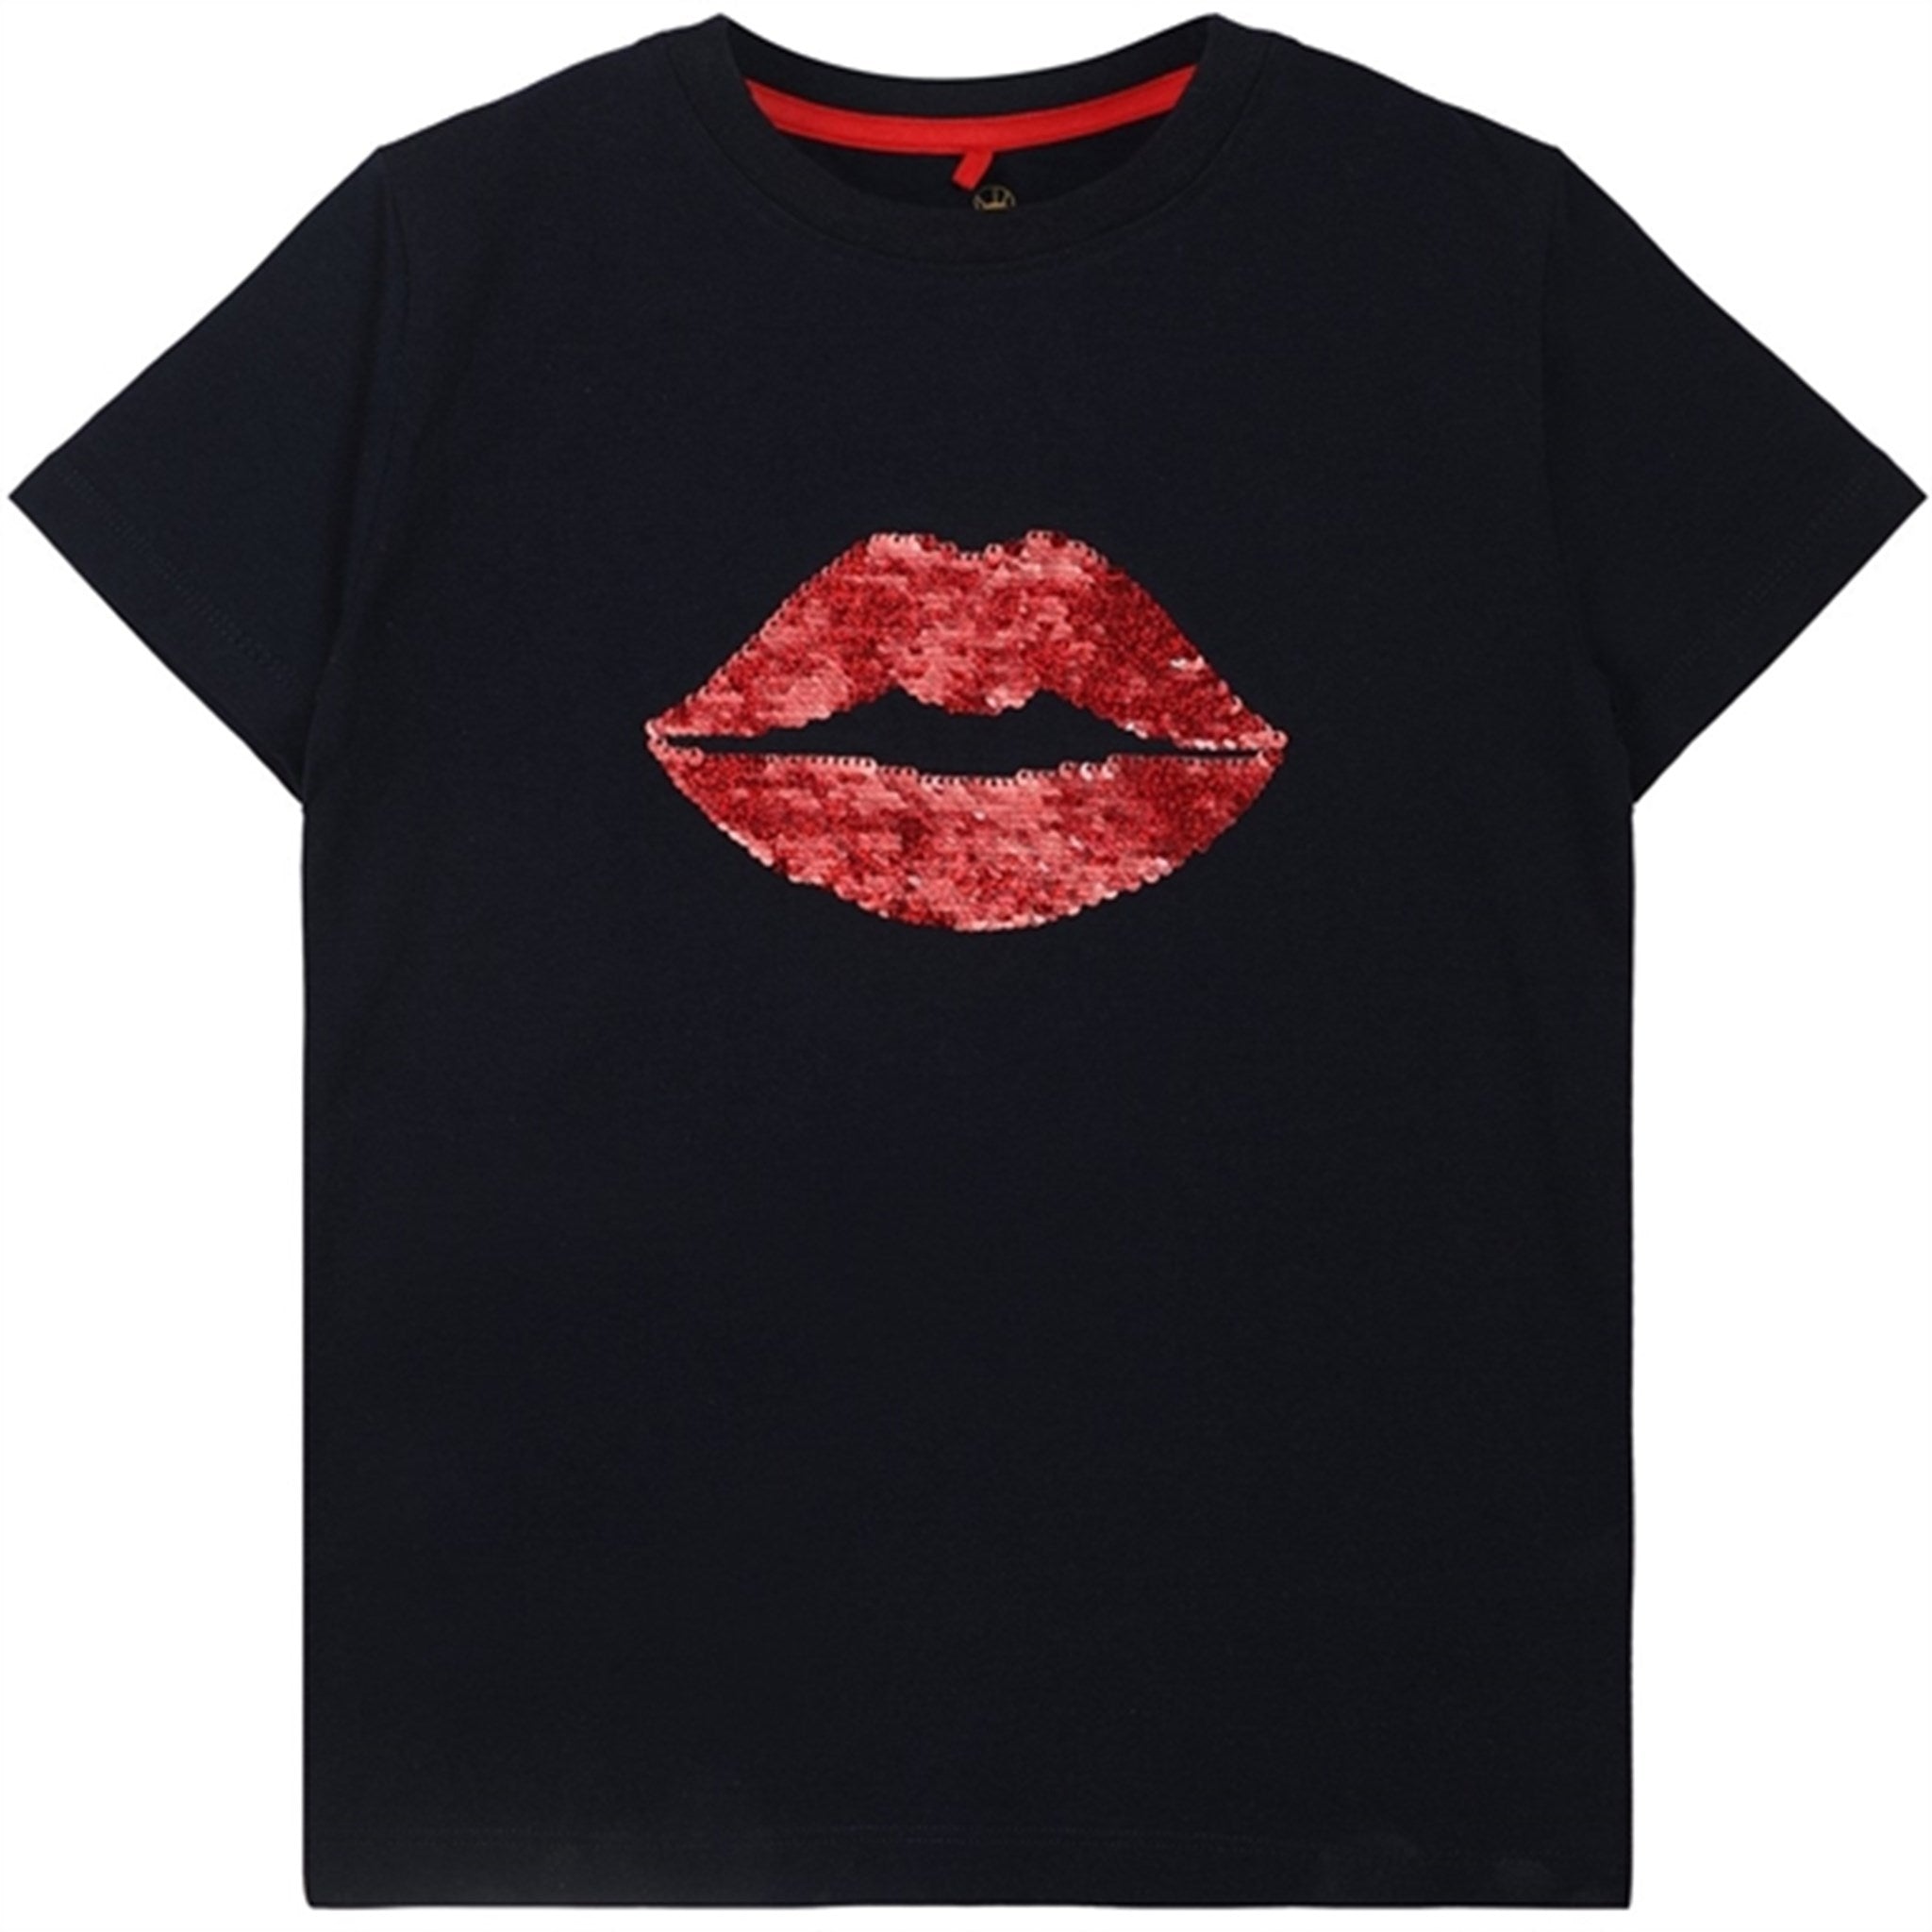 The New Navy Blazer Lips T-shirt